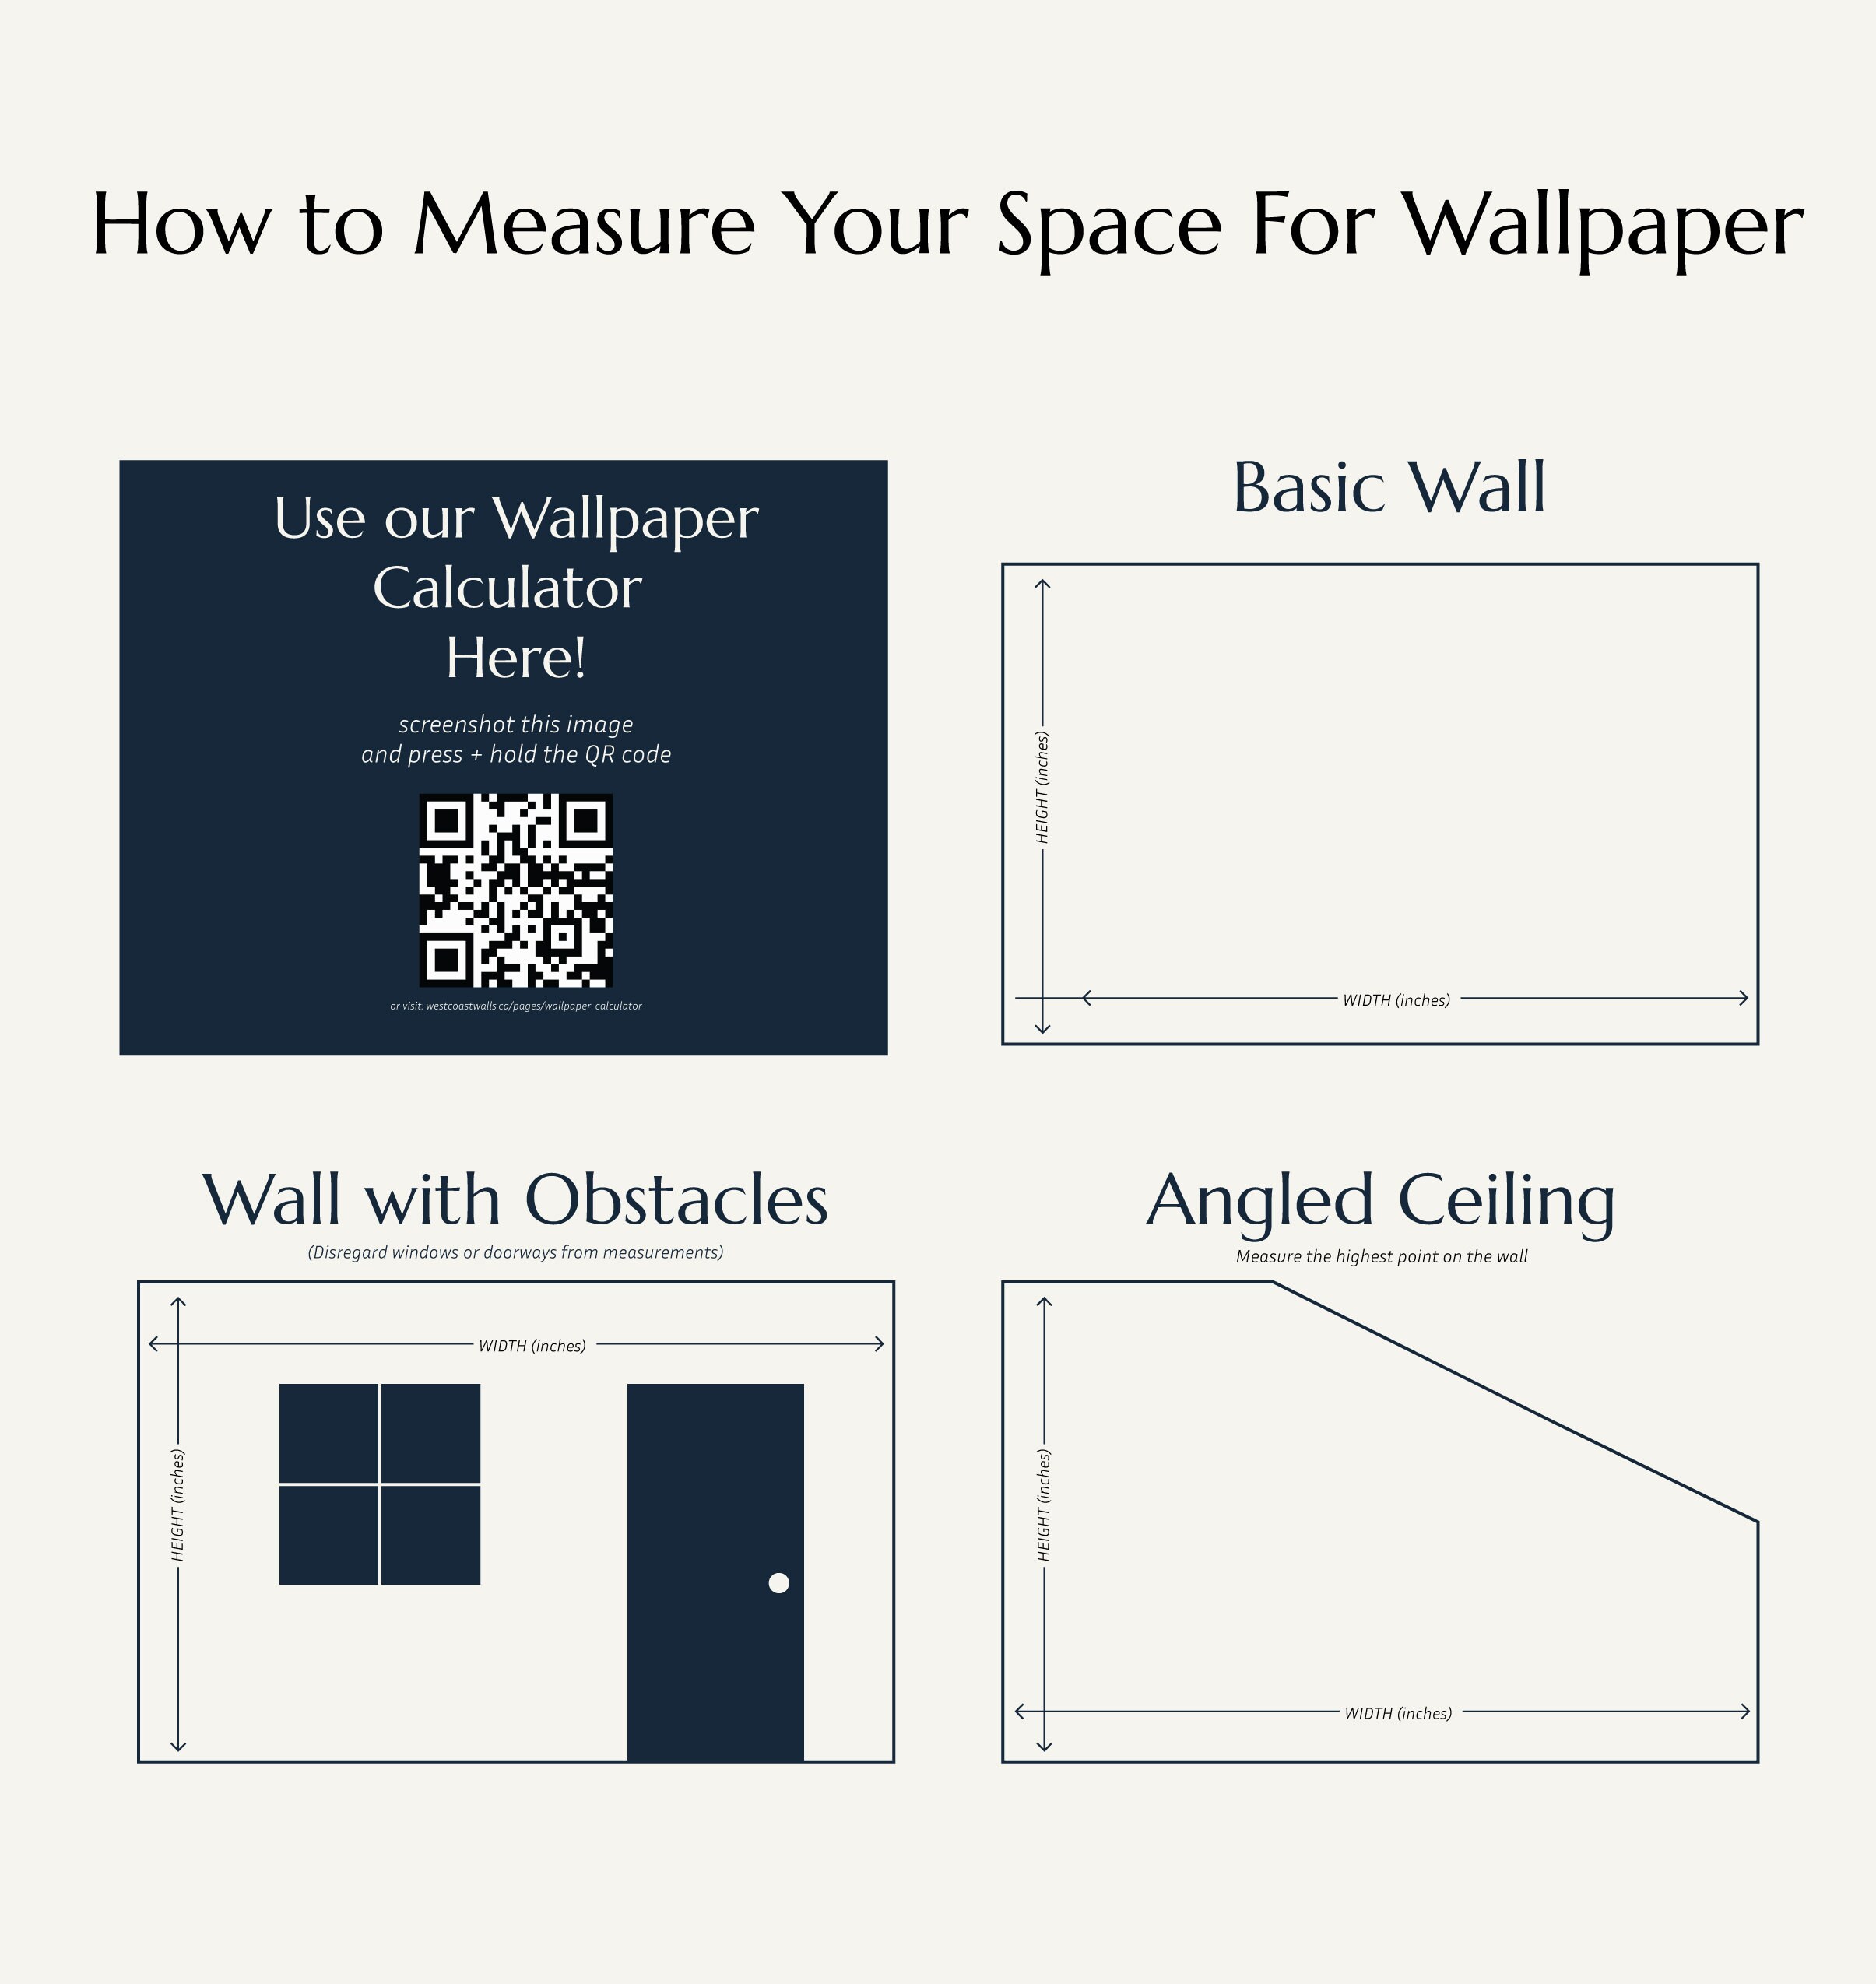 Polka Dot Plaid Wallpaper - SAMPLE ONLY – US Wall Decor